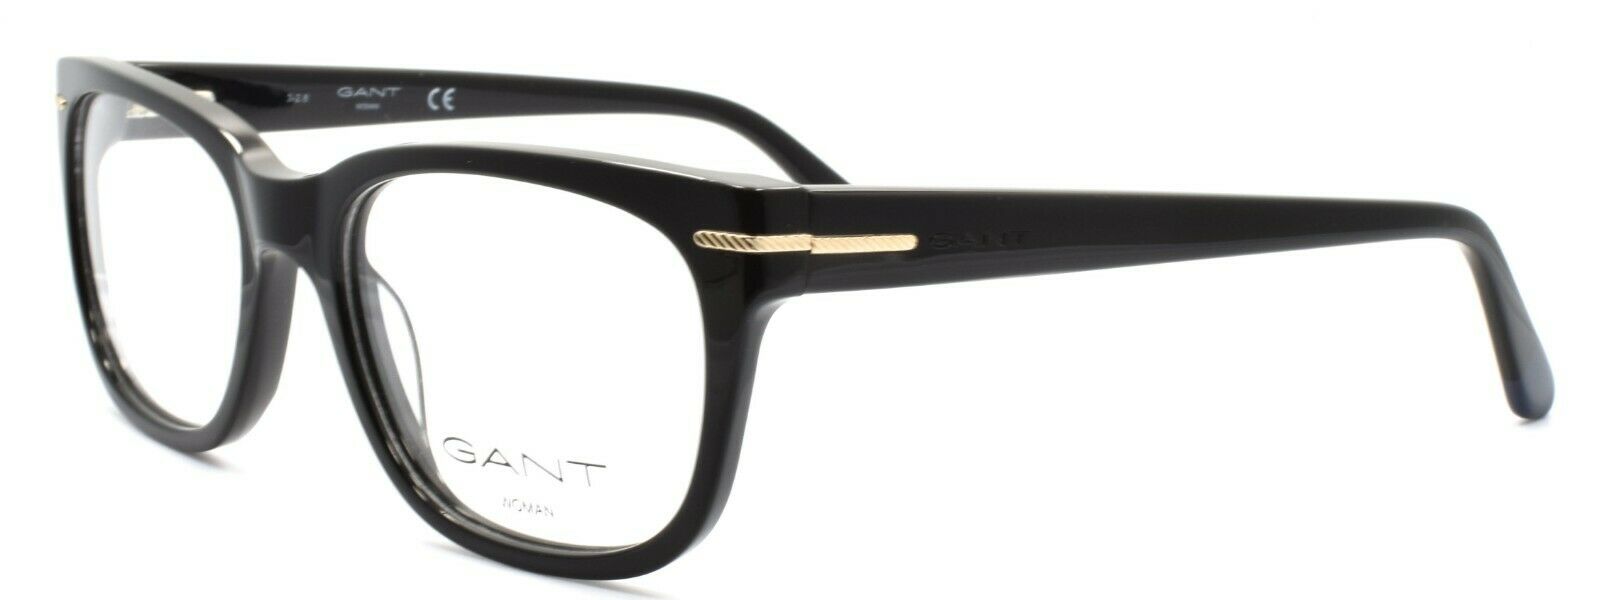 1-GANT GA4058 001 Women's Eyeglasses Frames 52-18-140 Shiny Black + CASE-664689790180-IKSpecs